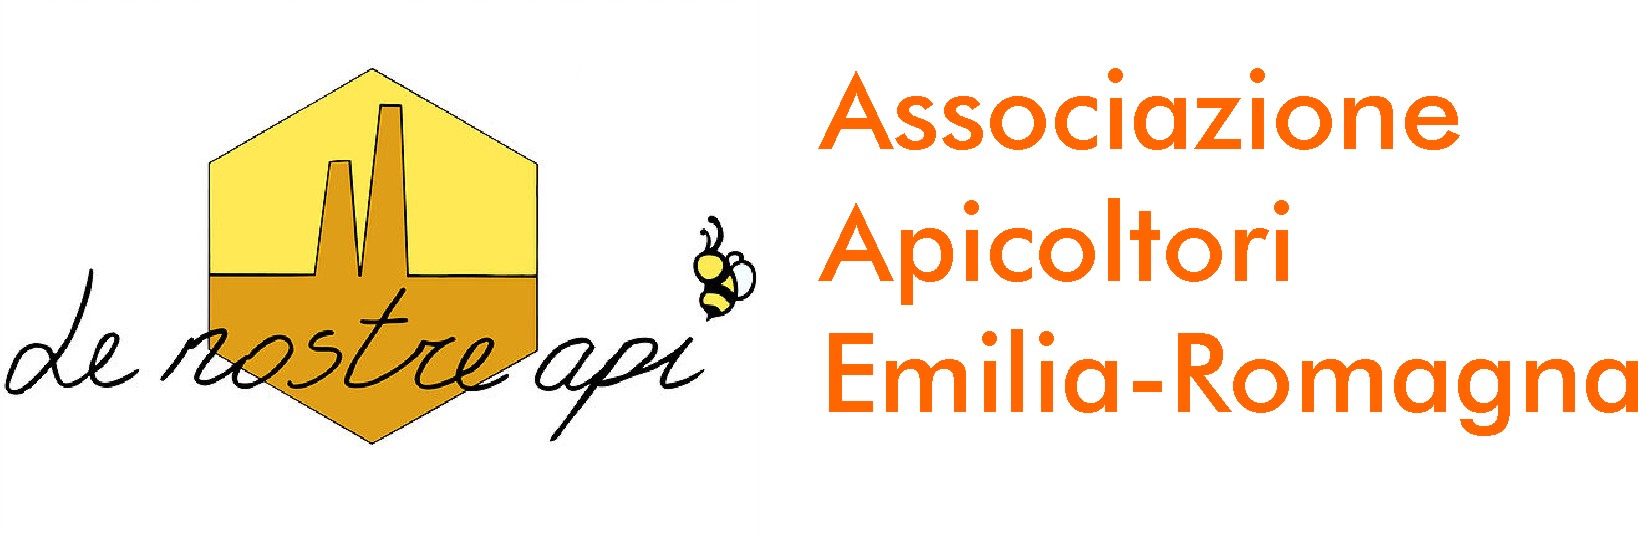 Associazione Apicoltori Emilia-Romagna  - Le nostre api